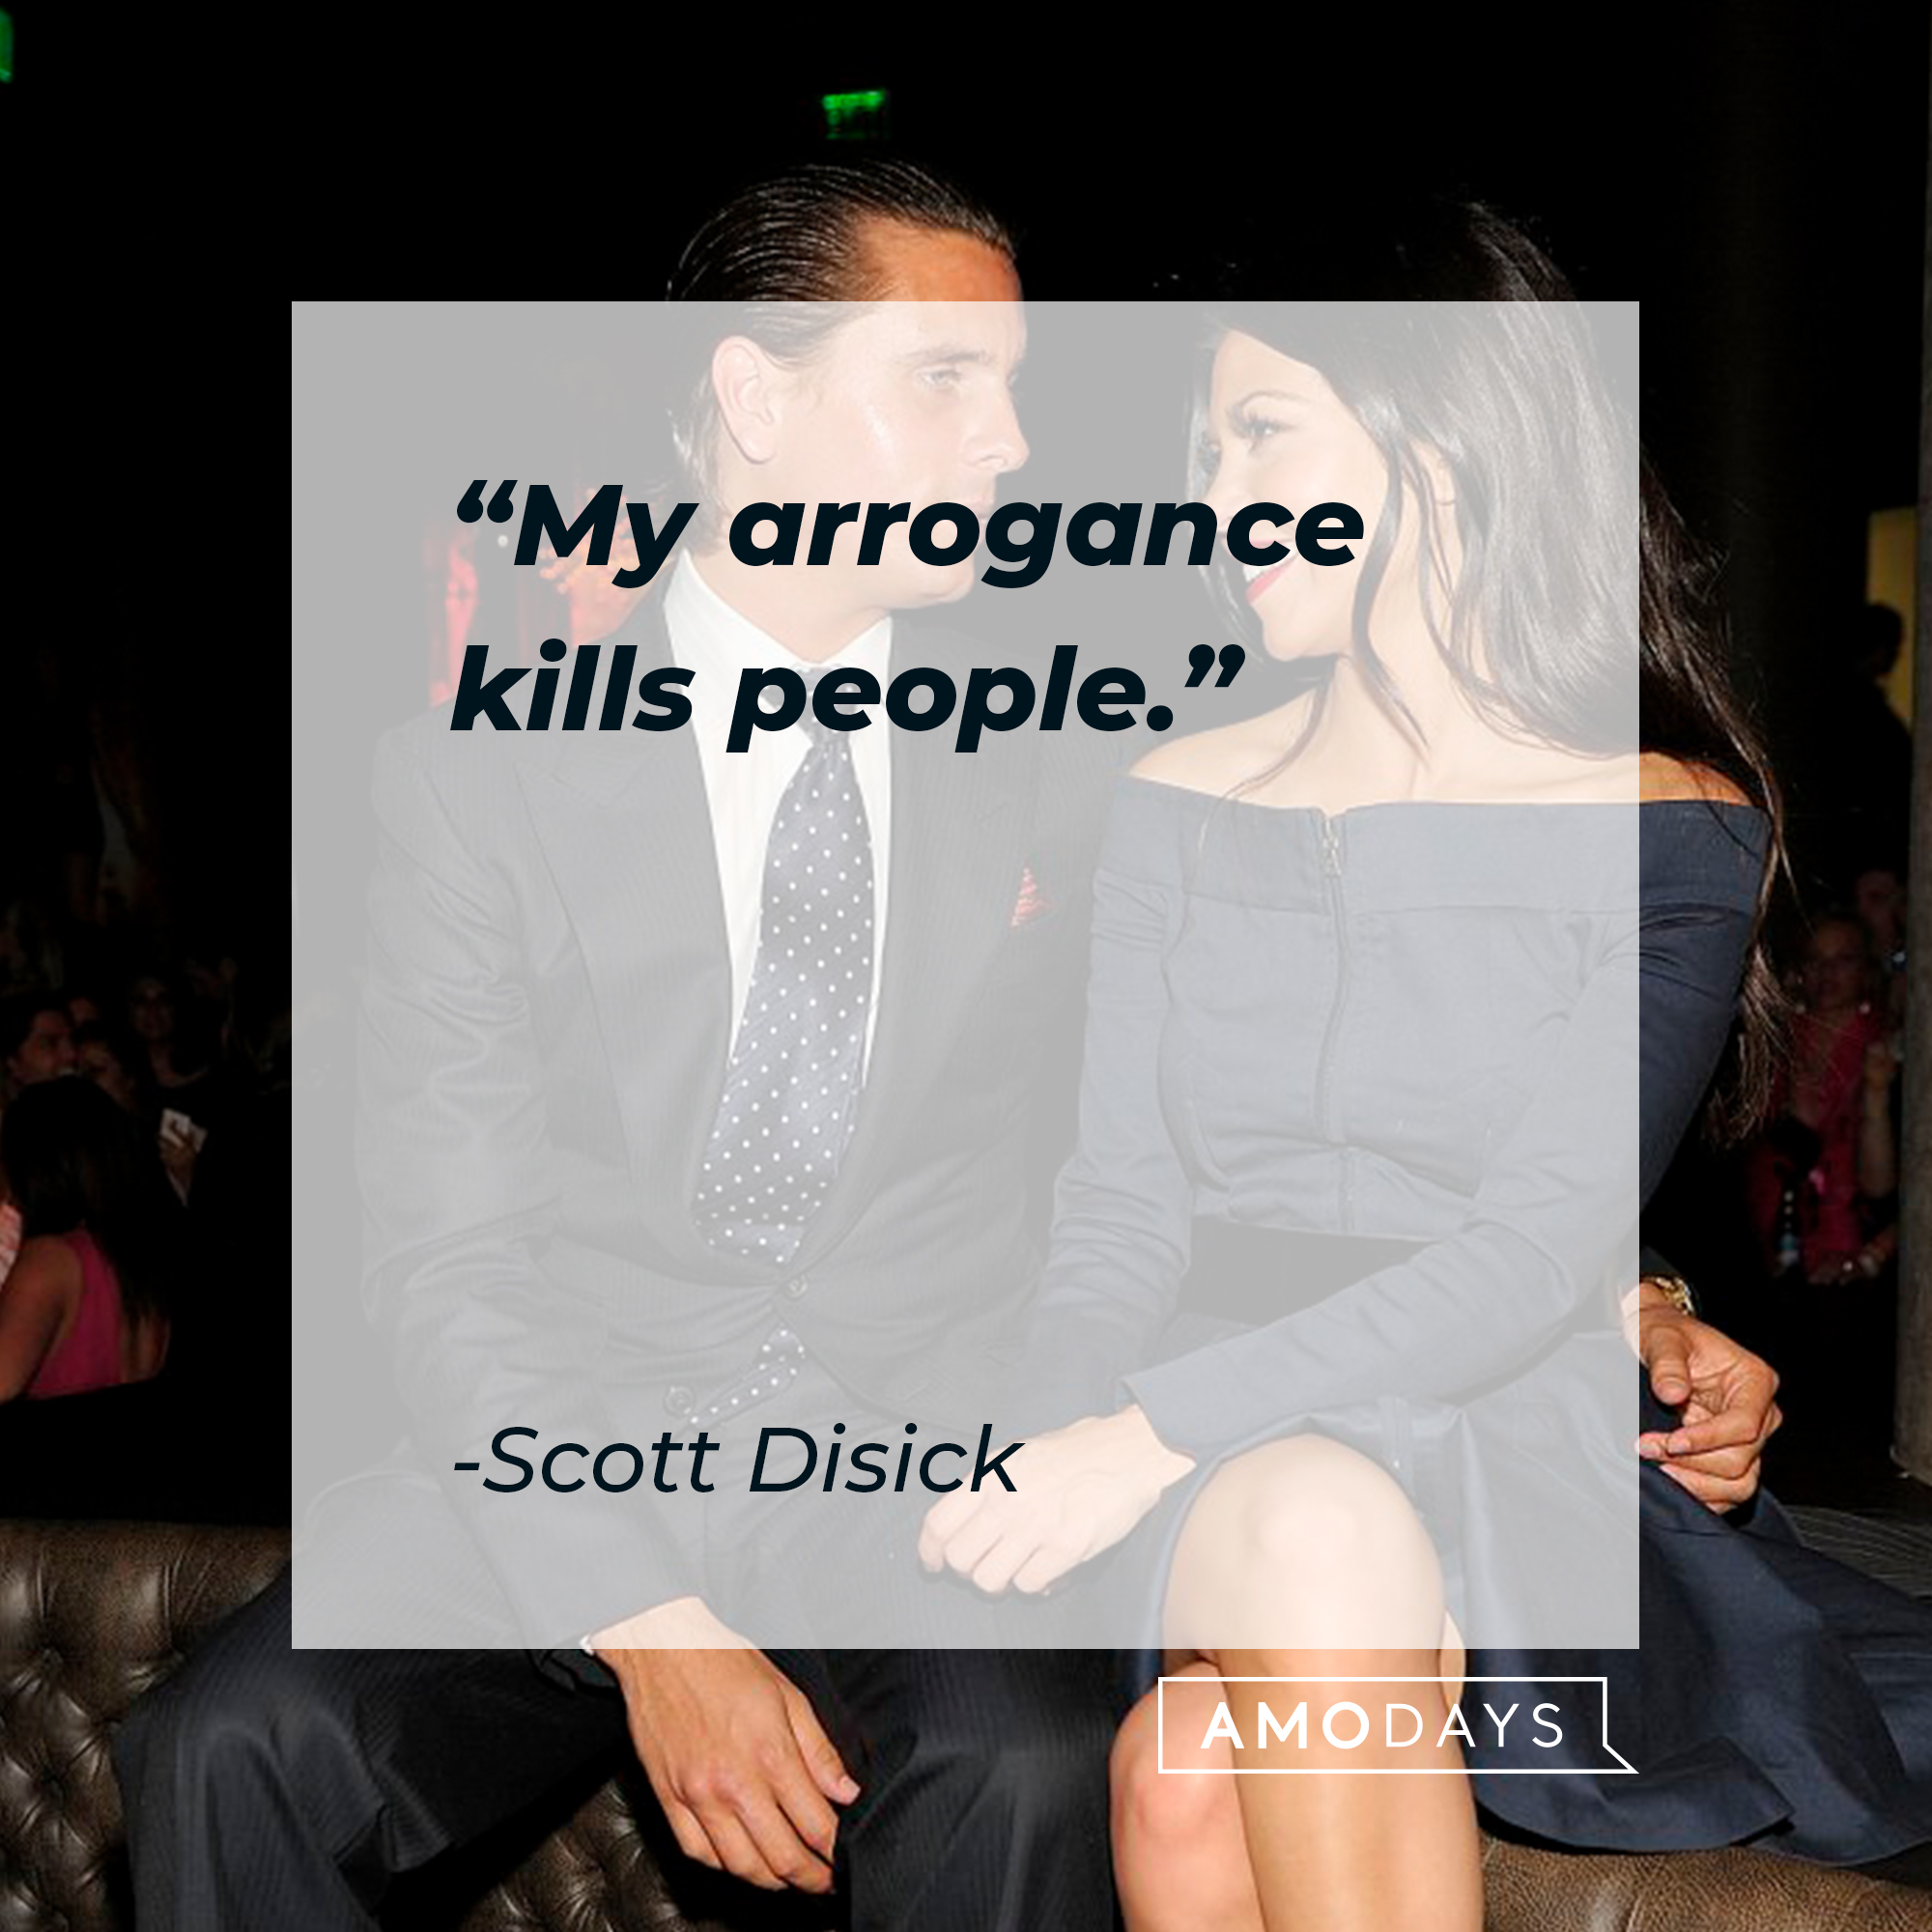 Scott Disick quote: "My arrogance kills people." | Source: Getty Images